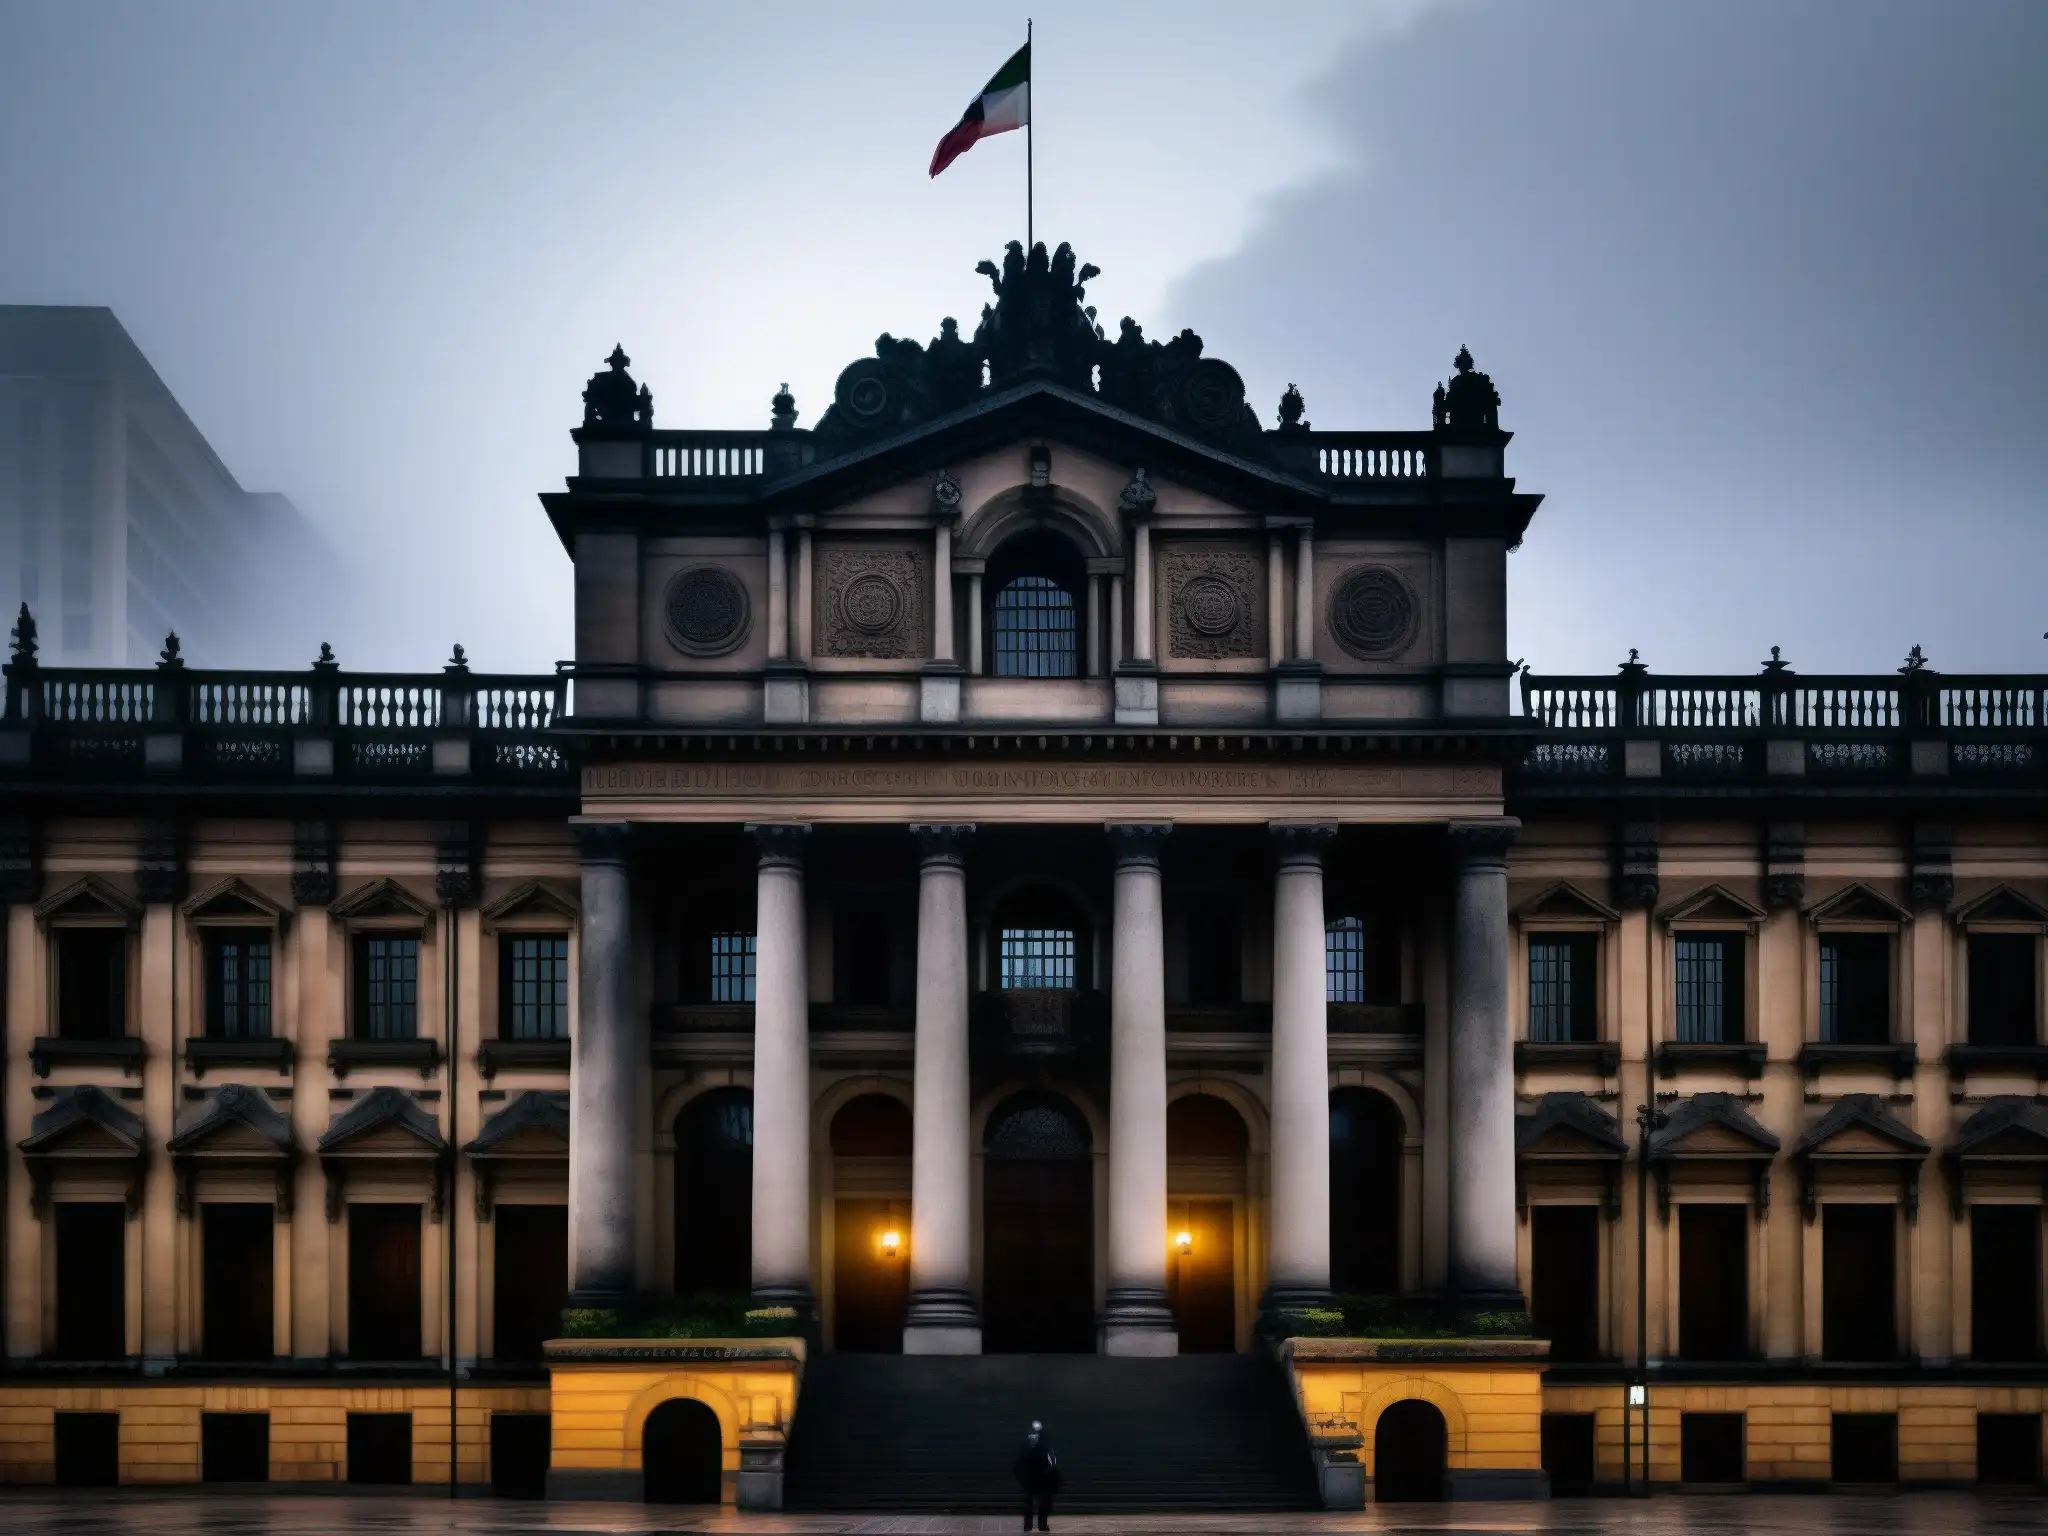 Edificio gubernamental latinoamericano con figura fantasmal, evocando historias sobrenaturales política latinoamericana